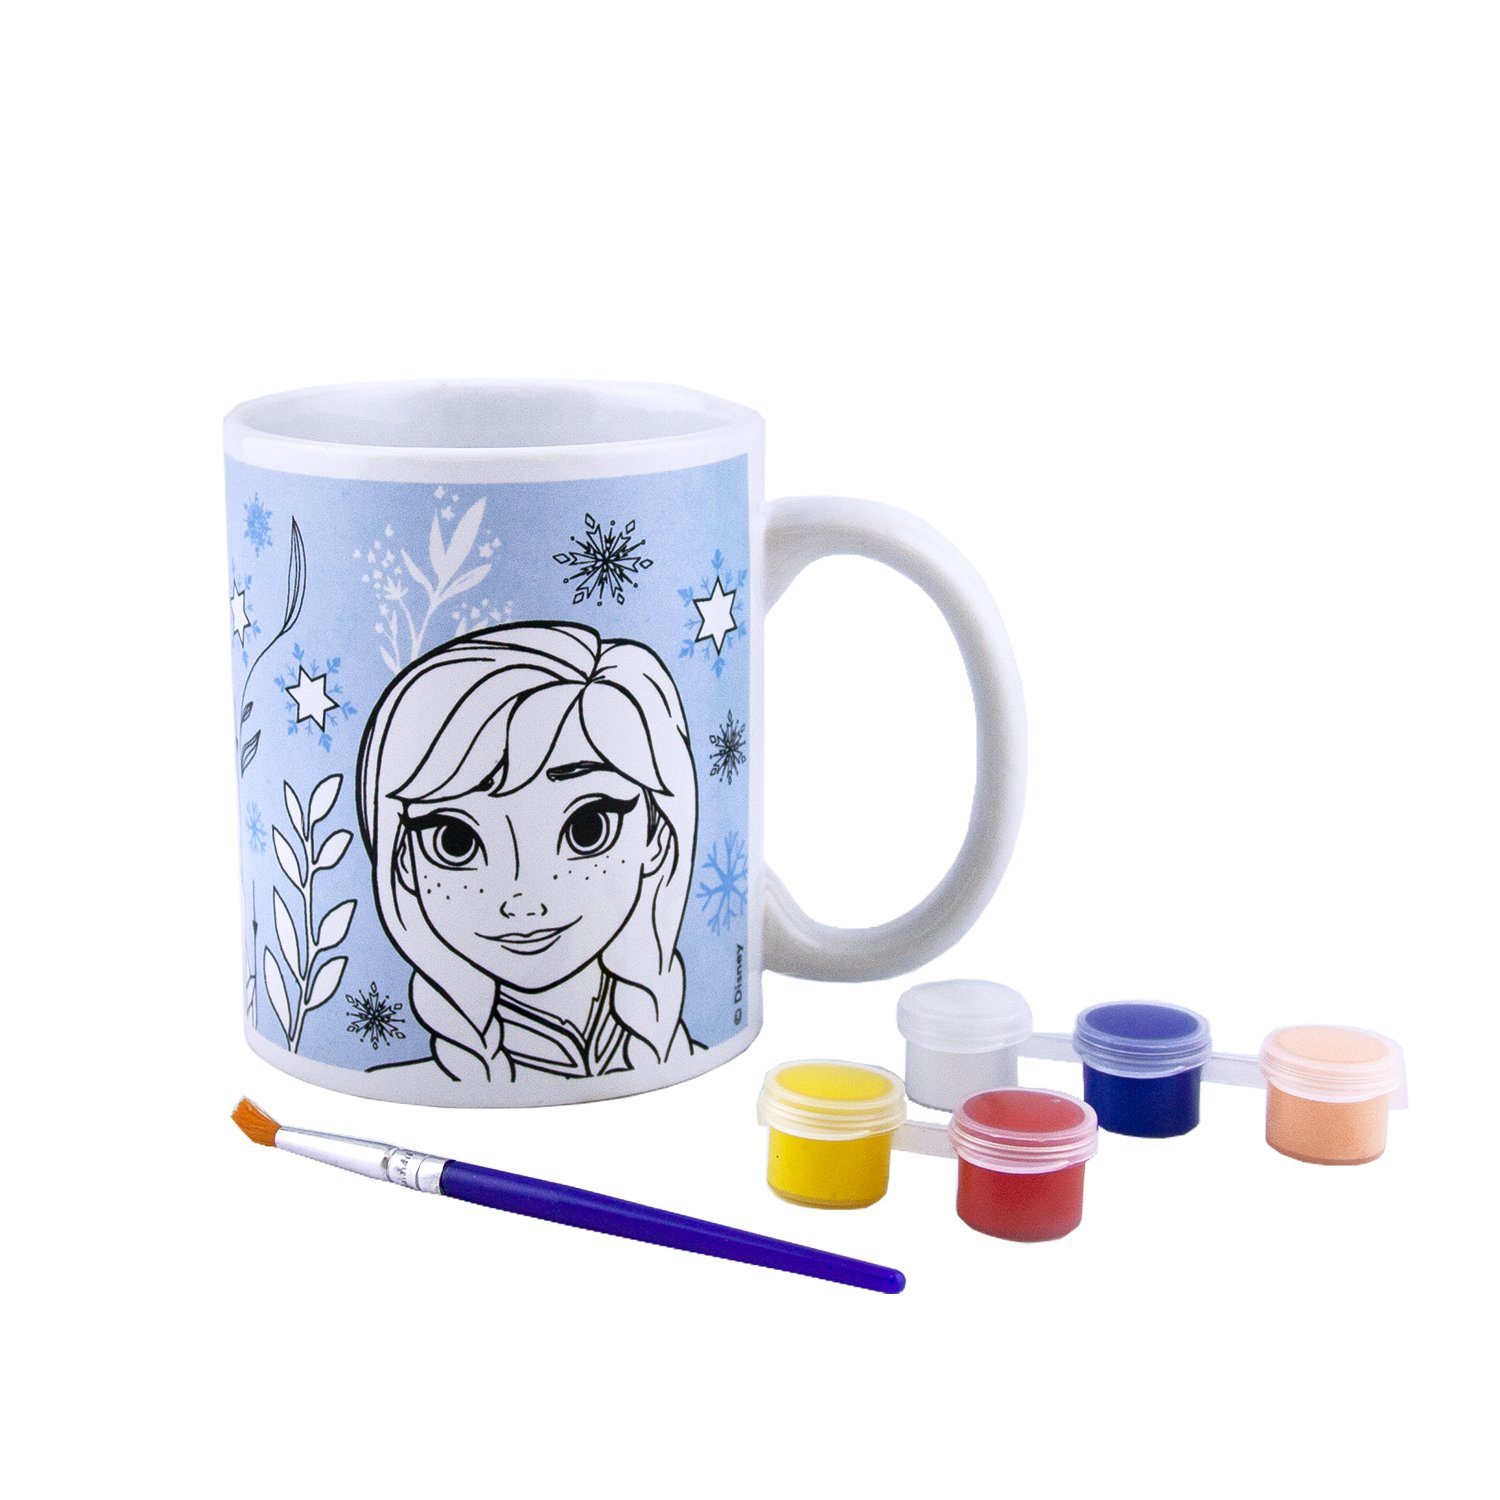 Frozen coloring soft mug